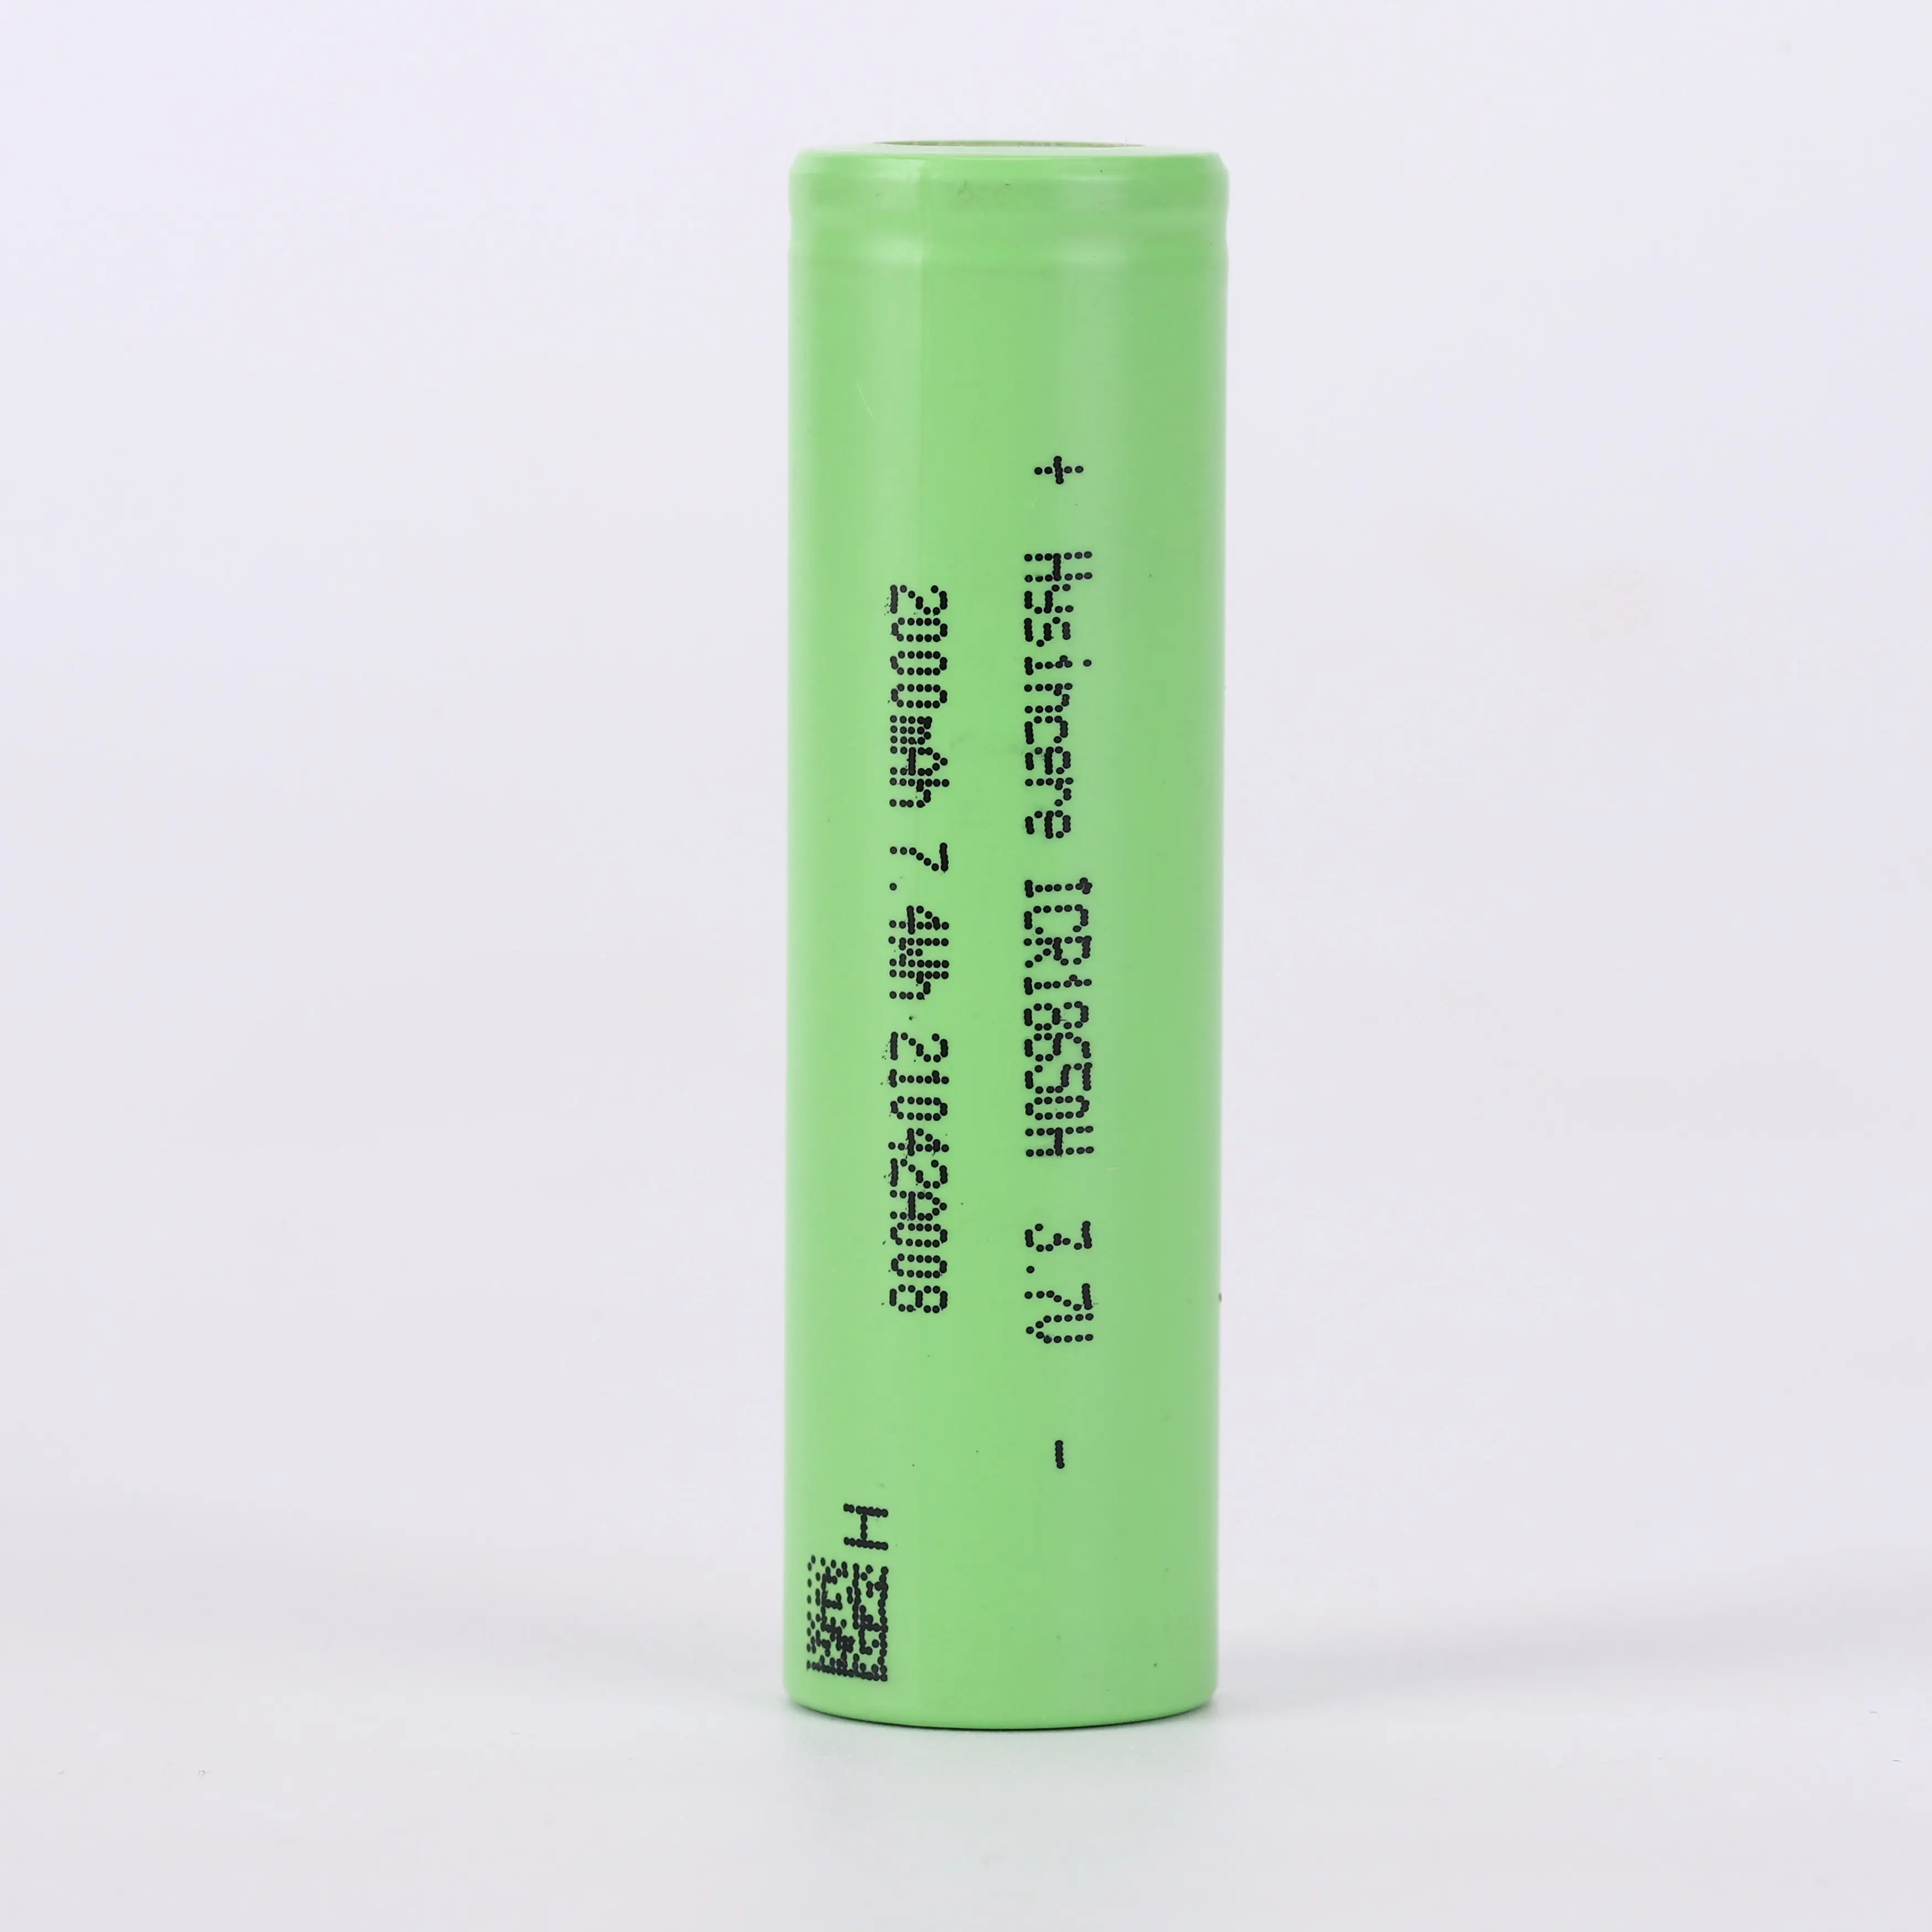 lifopo4 lithium battery 2600mah 18650 lithium battery 18650 battery 9x xml-t6 led flashlight litokala 18650